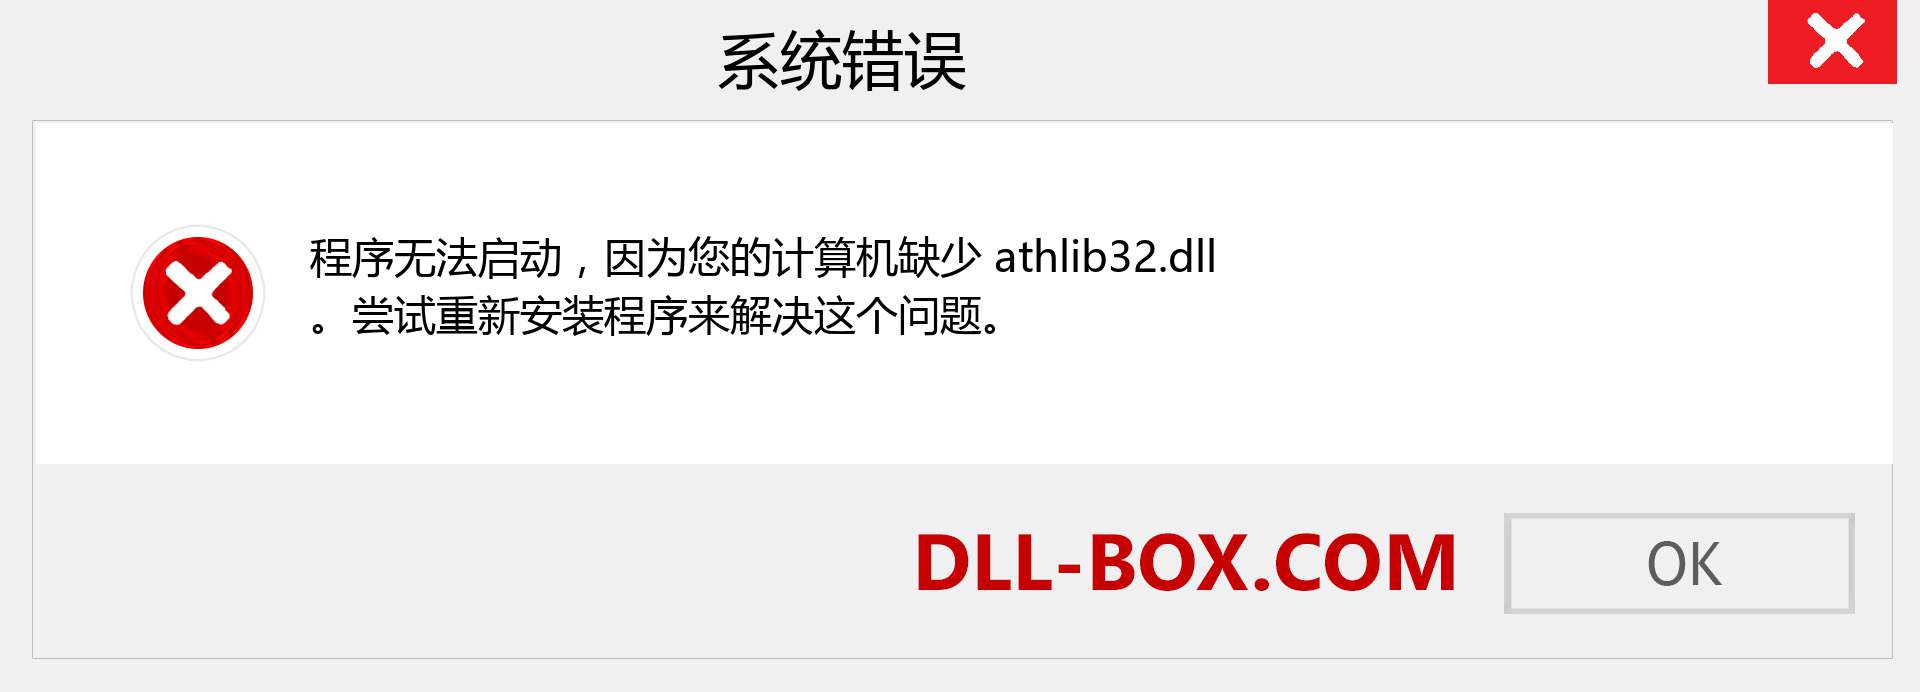 athlib32.dll 文件丢失？。 适用于 Windows 7、8、10 的下载 - 修复 Windows、照片、图像上的 athlib32 dll 丢失错误